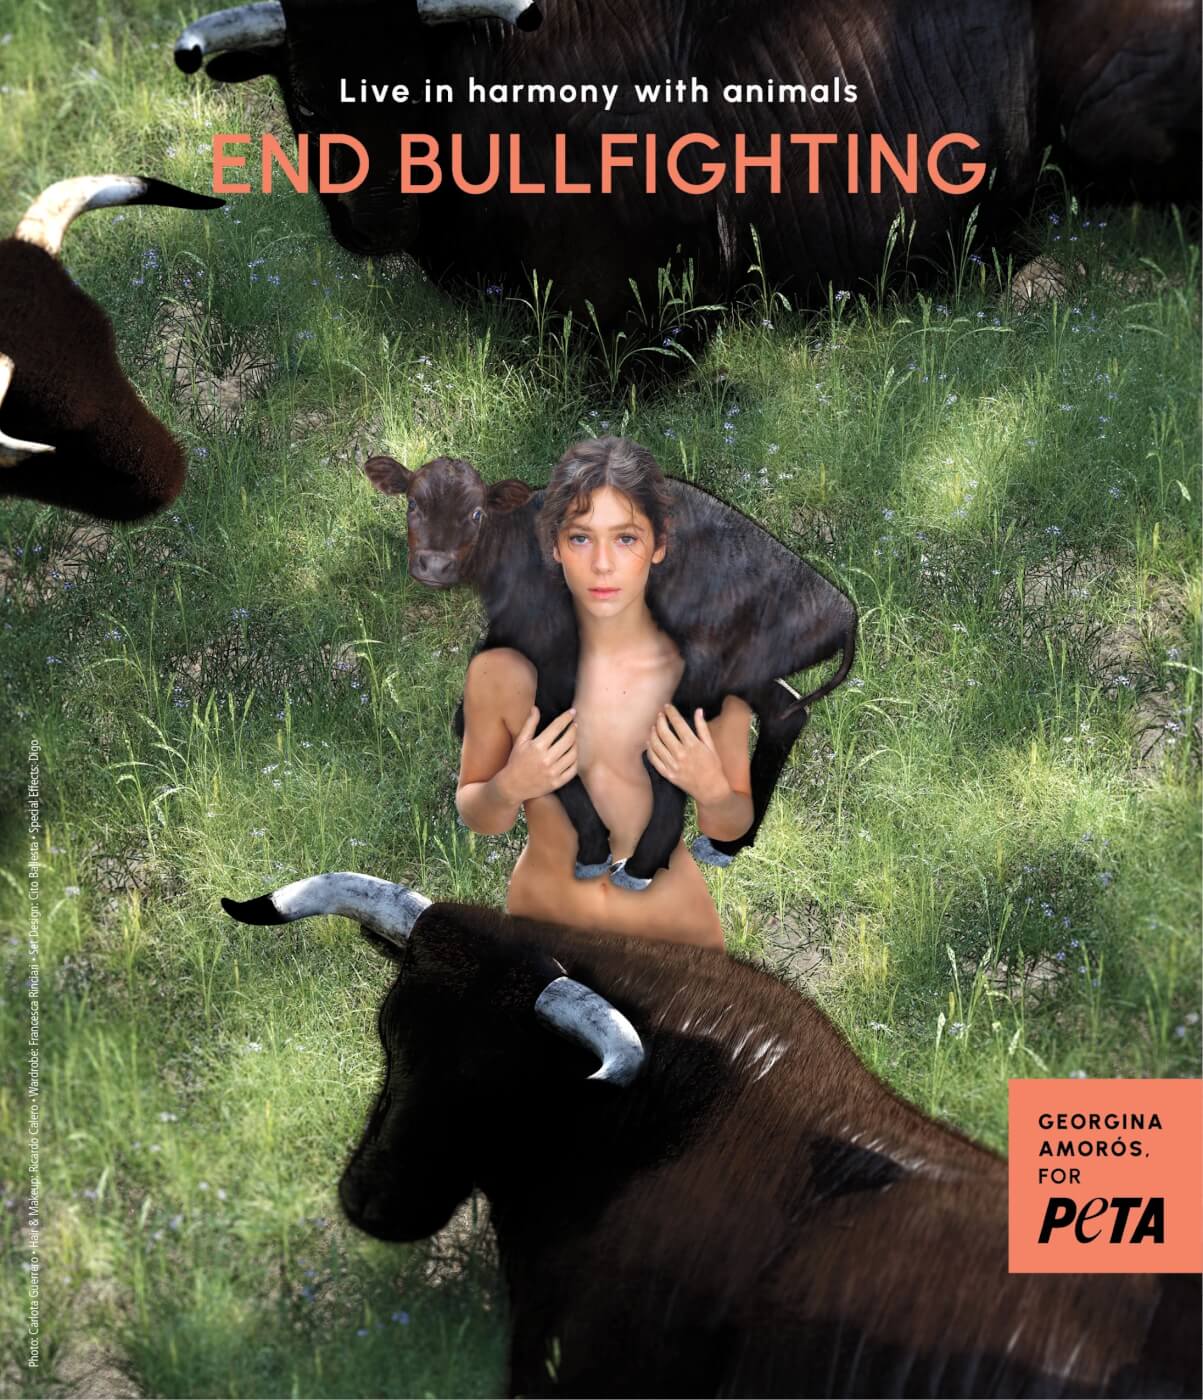 Georgina Amoros "End Bullfighting" ad